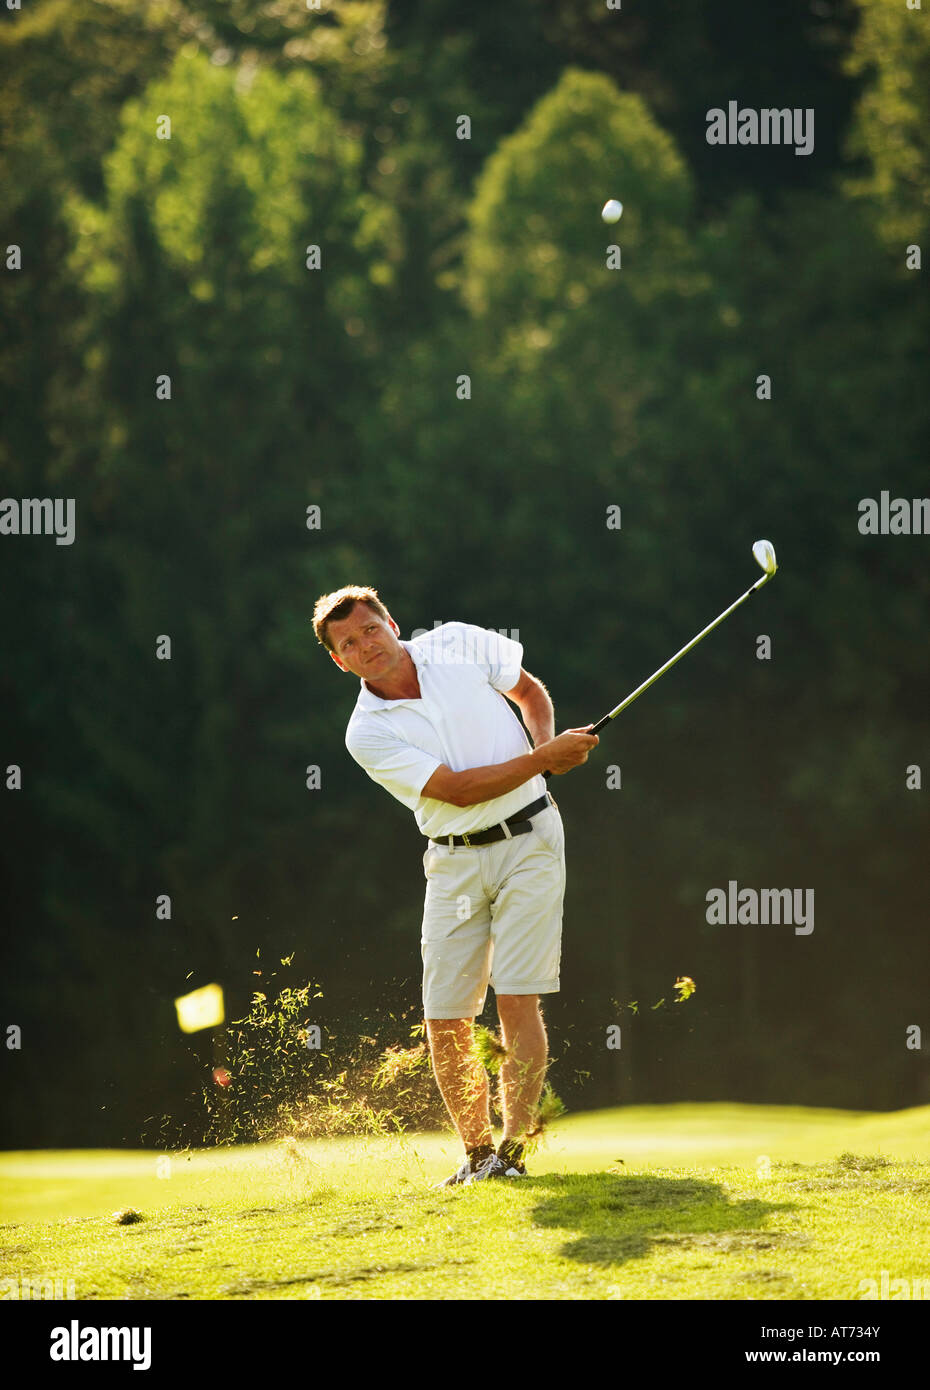 Austria, Male golfer swinging club on fairway Stock Photo